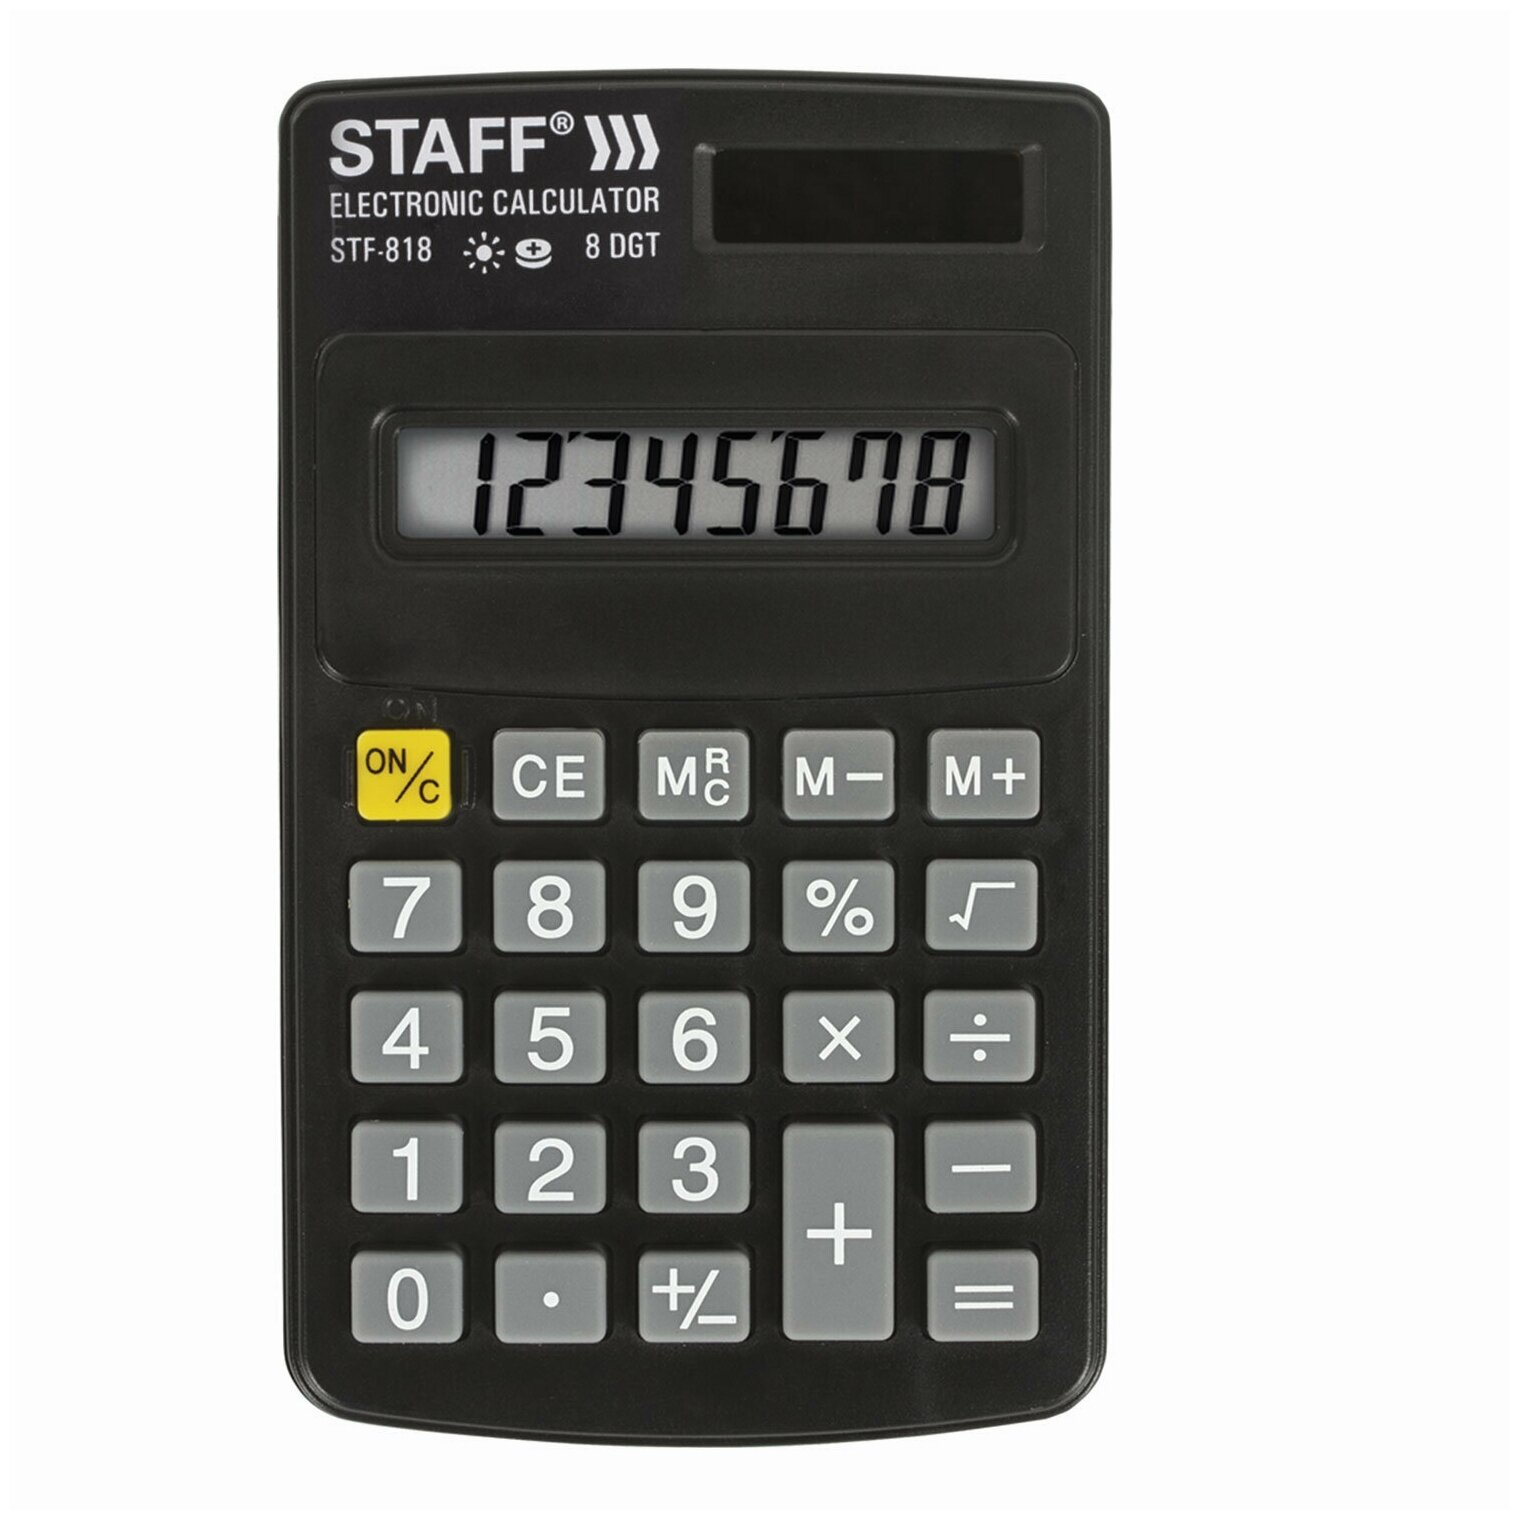 STAFF Калькулятор карманный staff stf-818 (102х62 мм) 8 разрядов двойное питание 250142